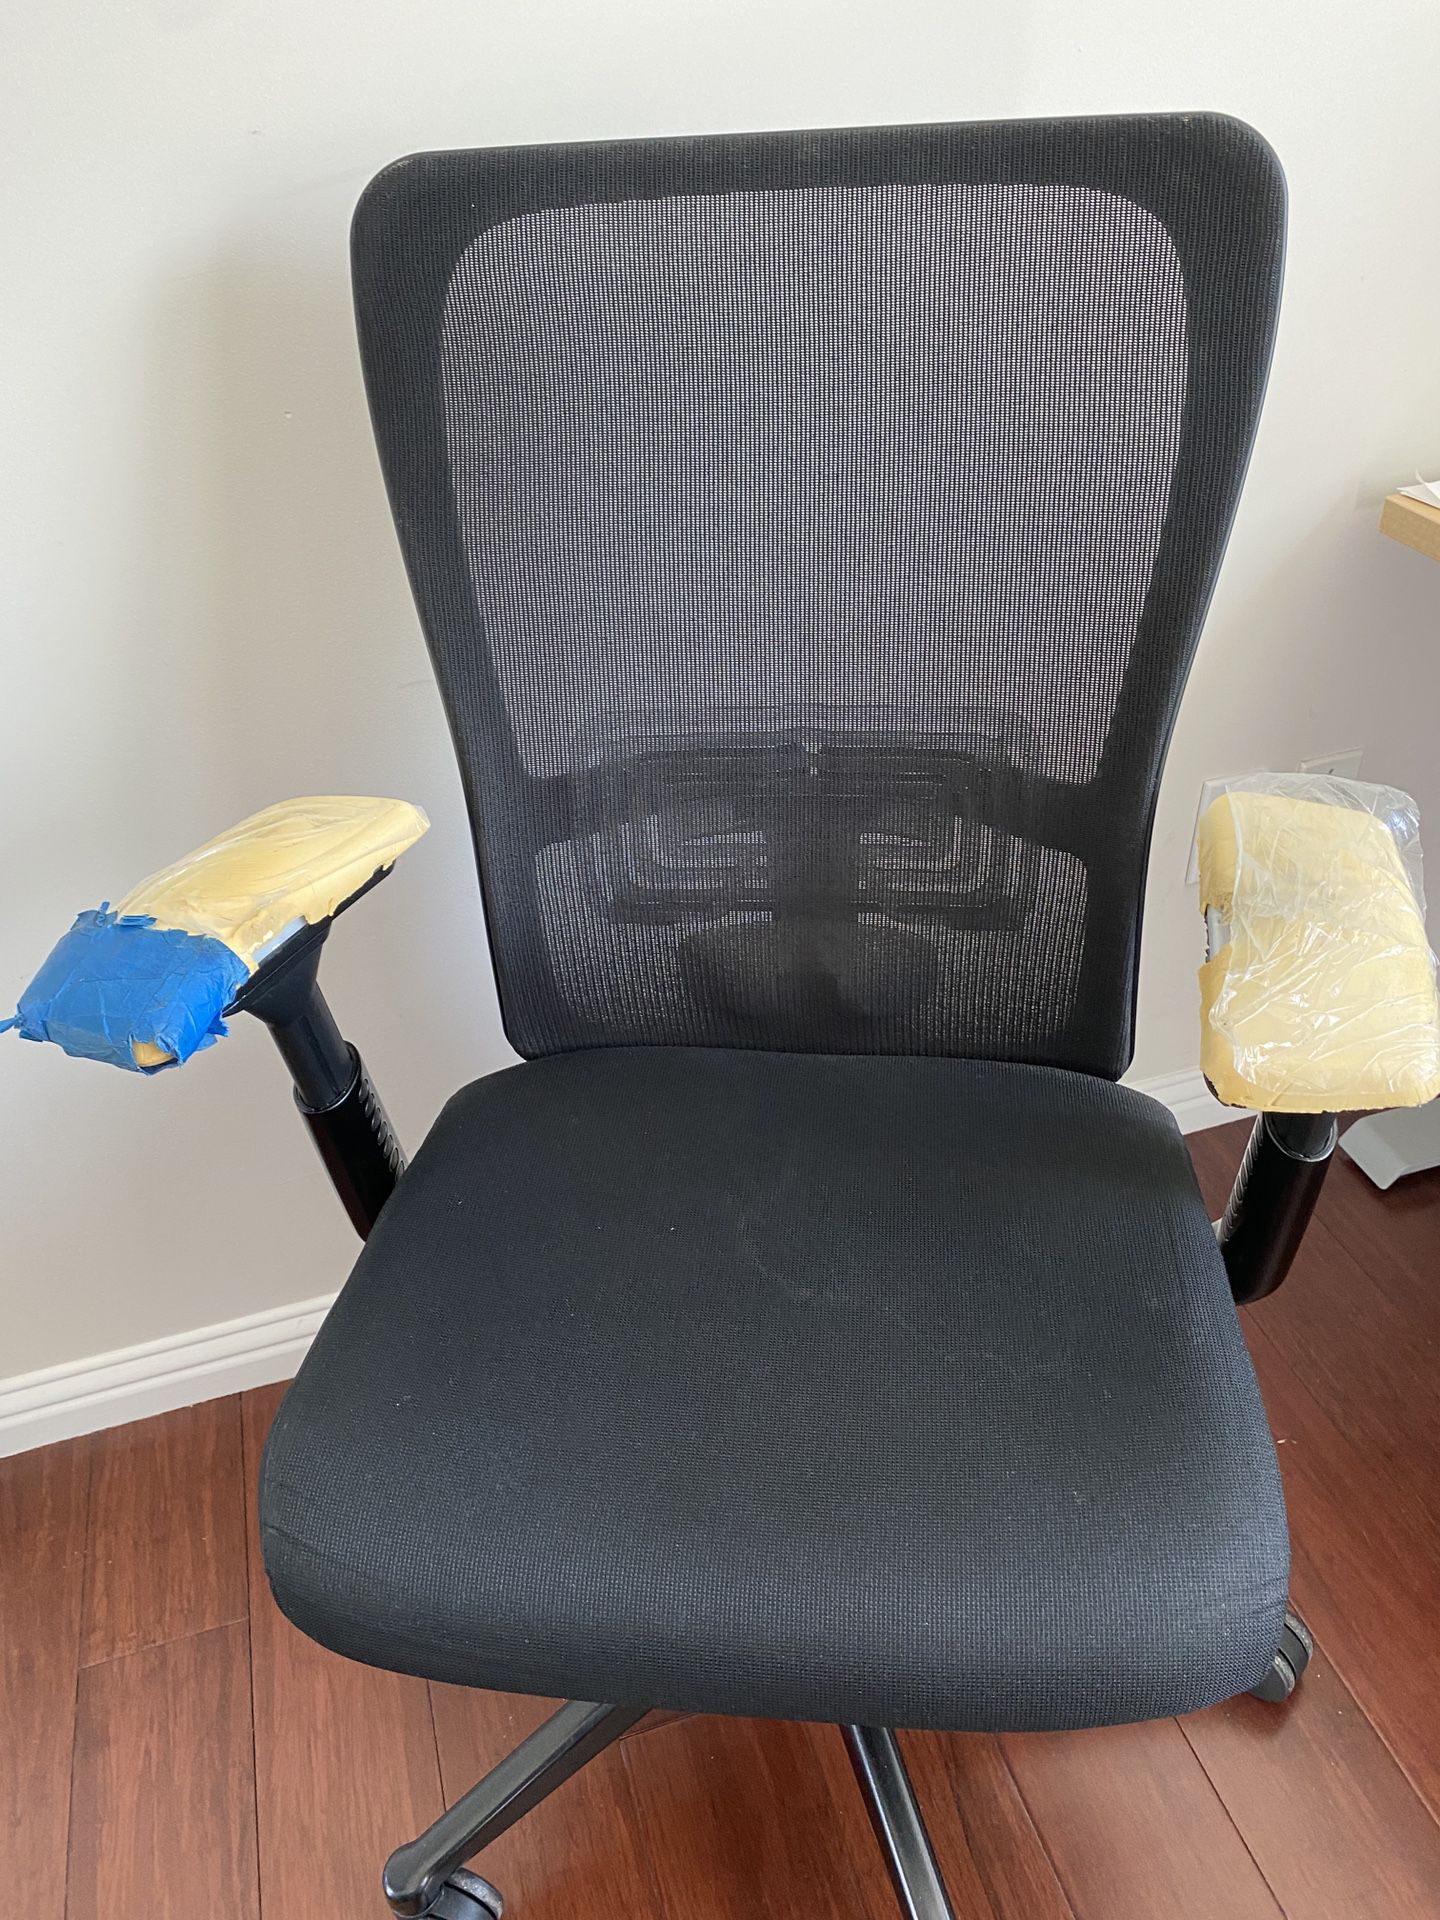 Free Ergonomic Desk Chair 